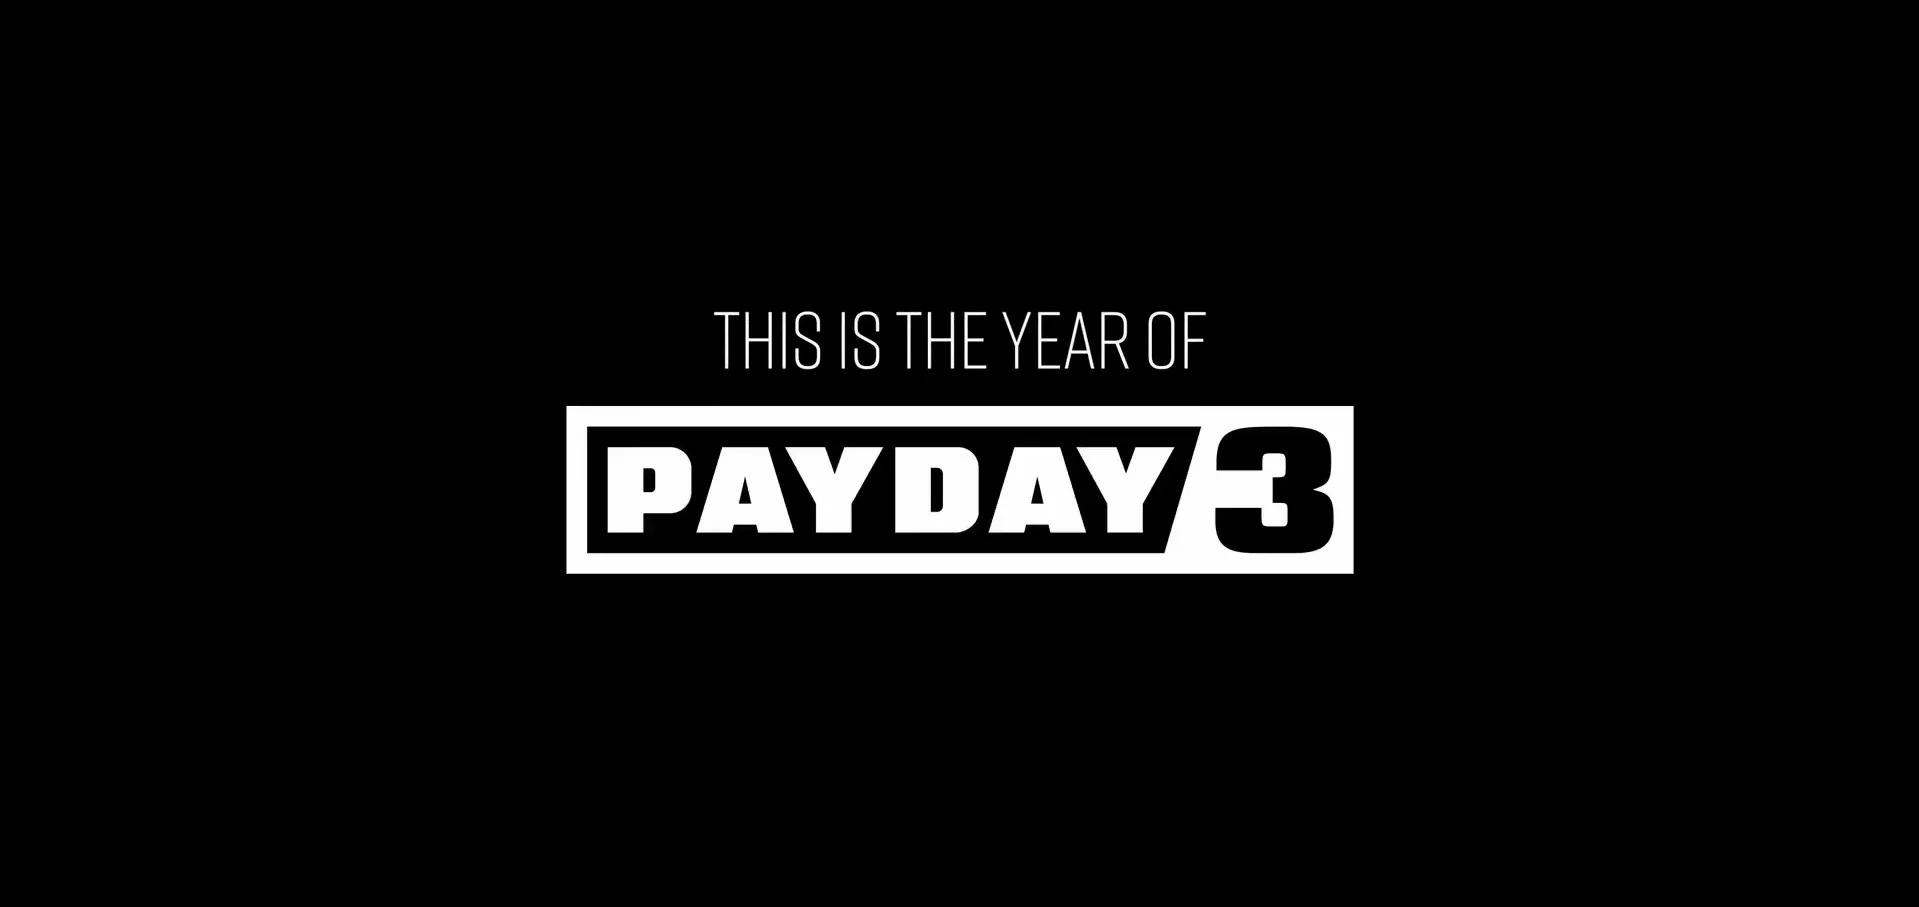 payday 3 logo 